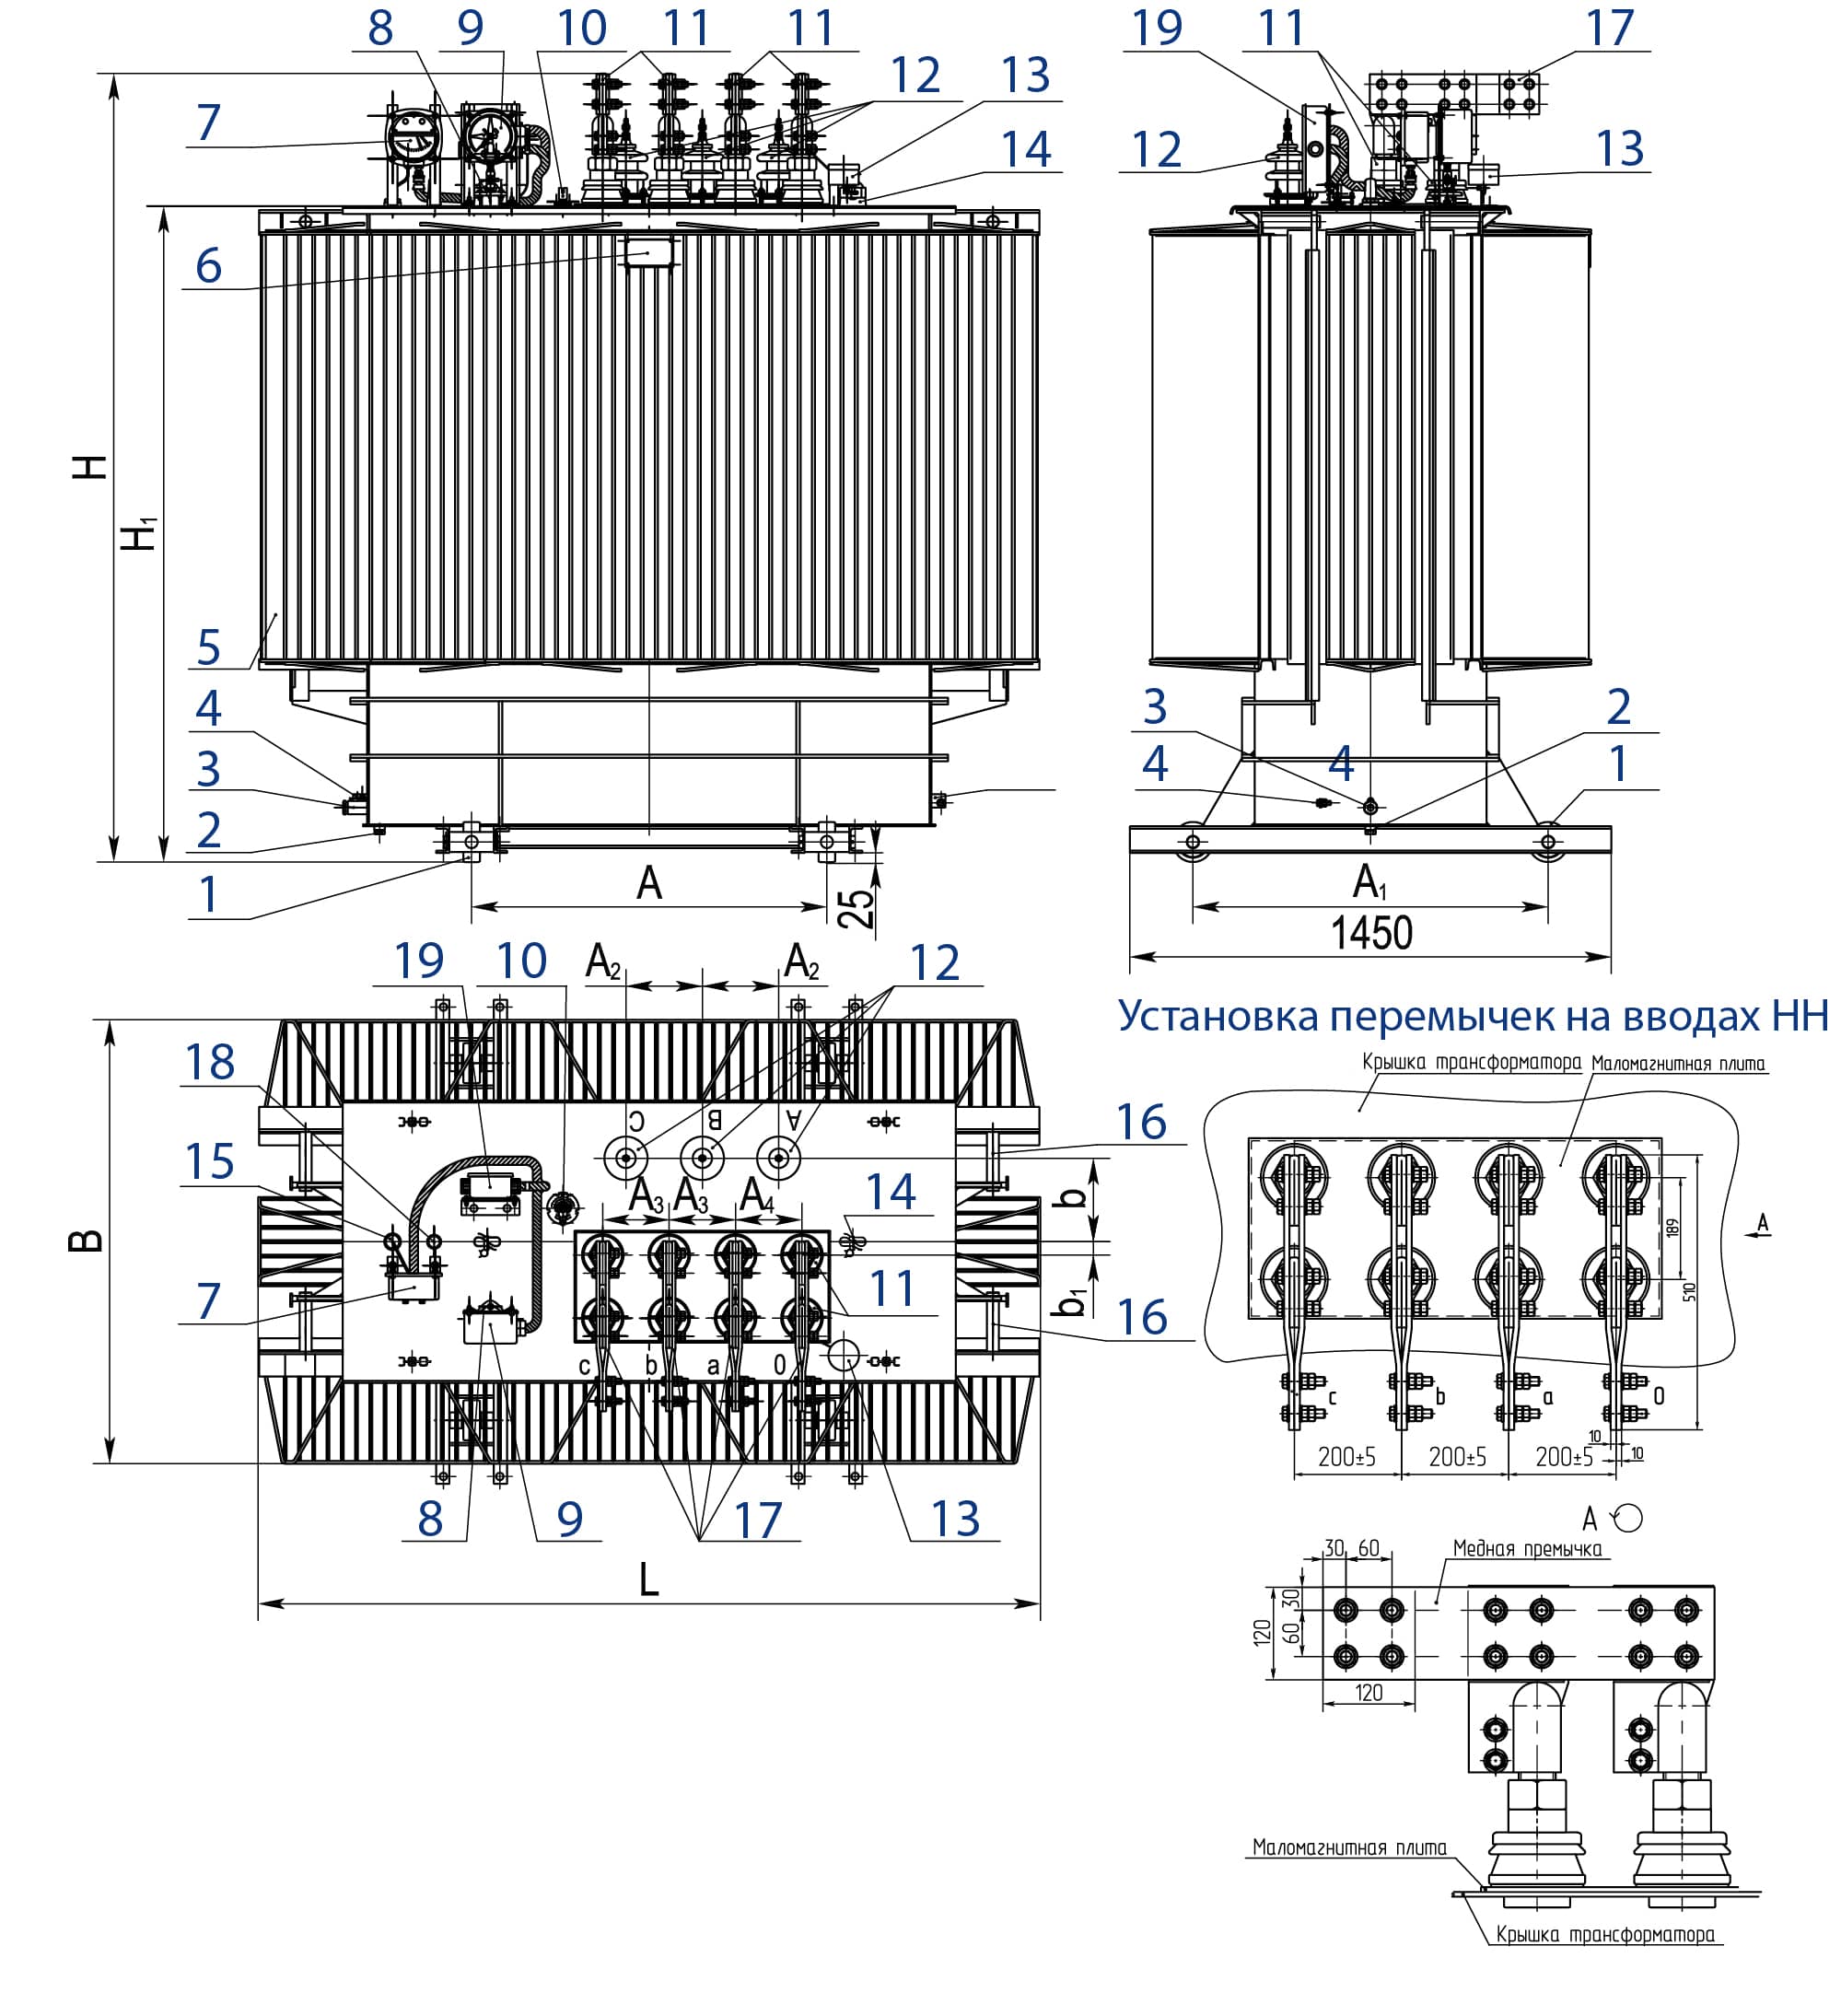 Схема трансформатора ТМГ 11